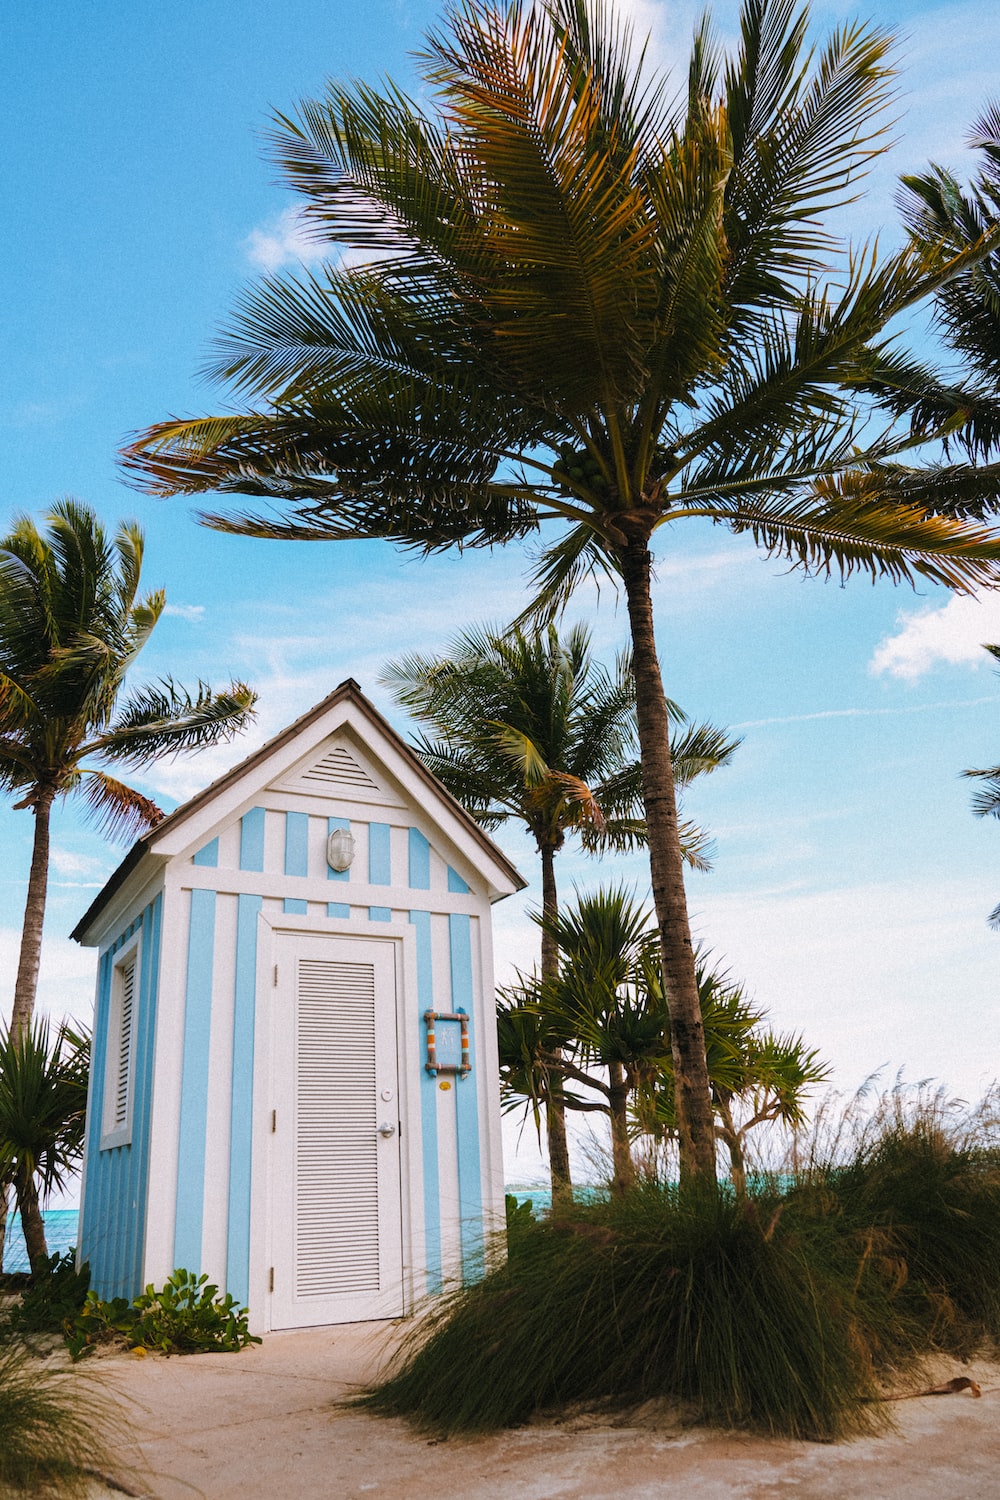  Explore the Beauty of Nassau Bahamas - A Vacation Destination Like No Other